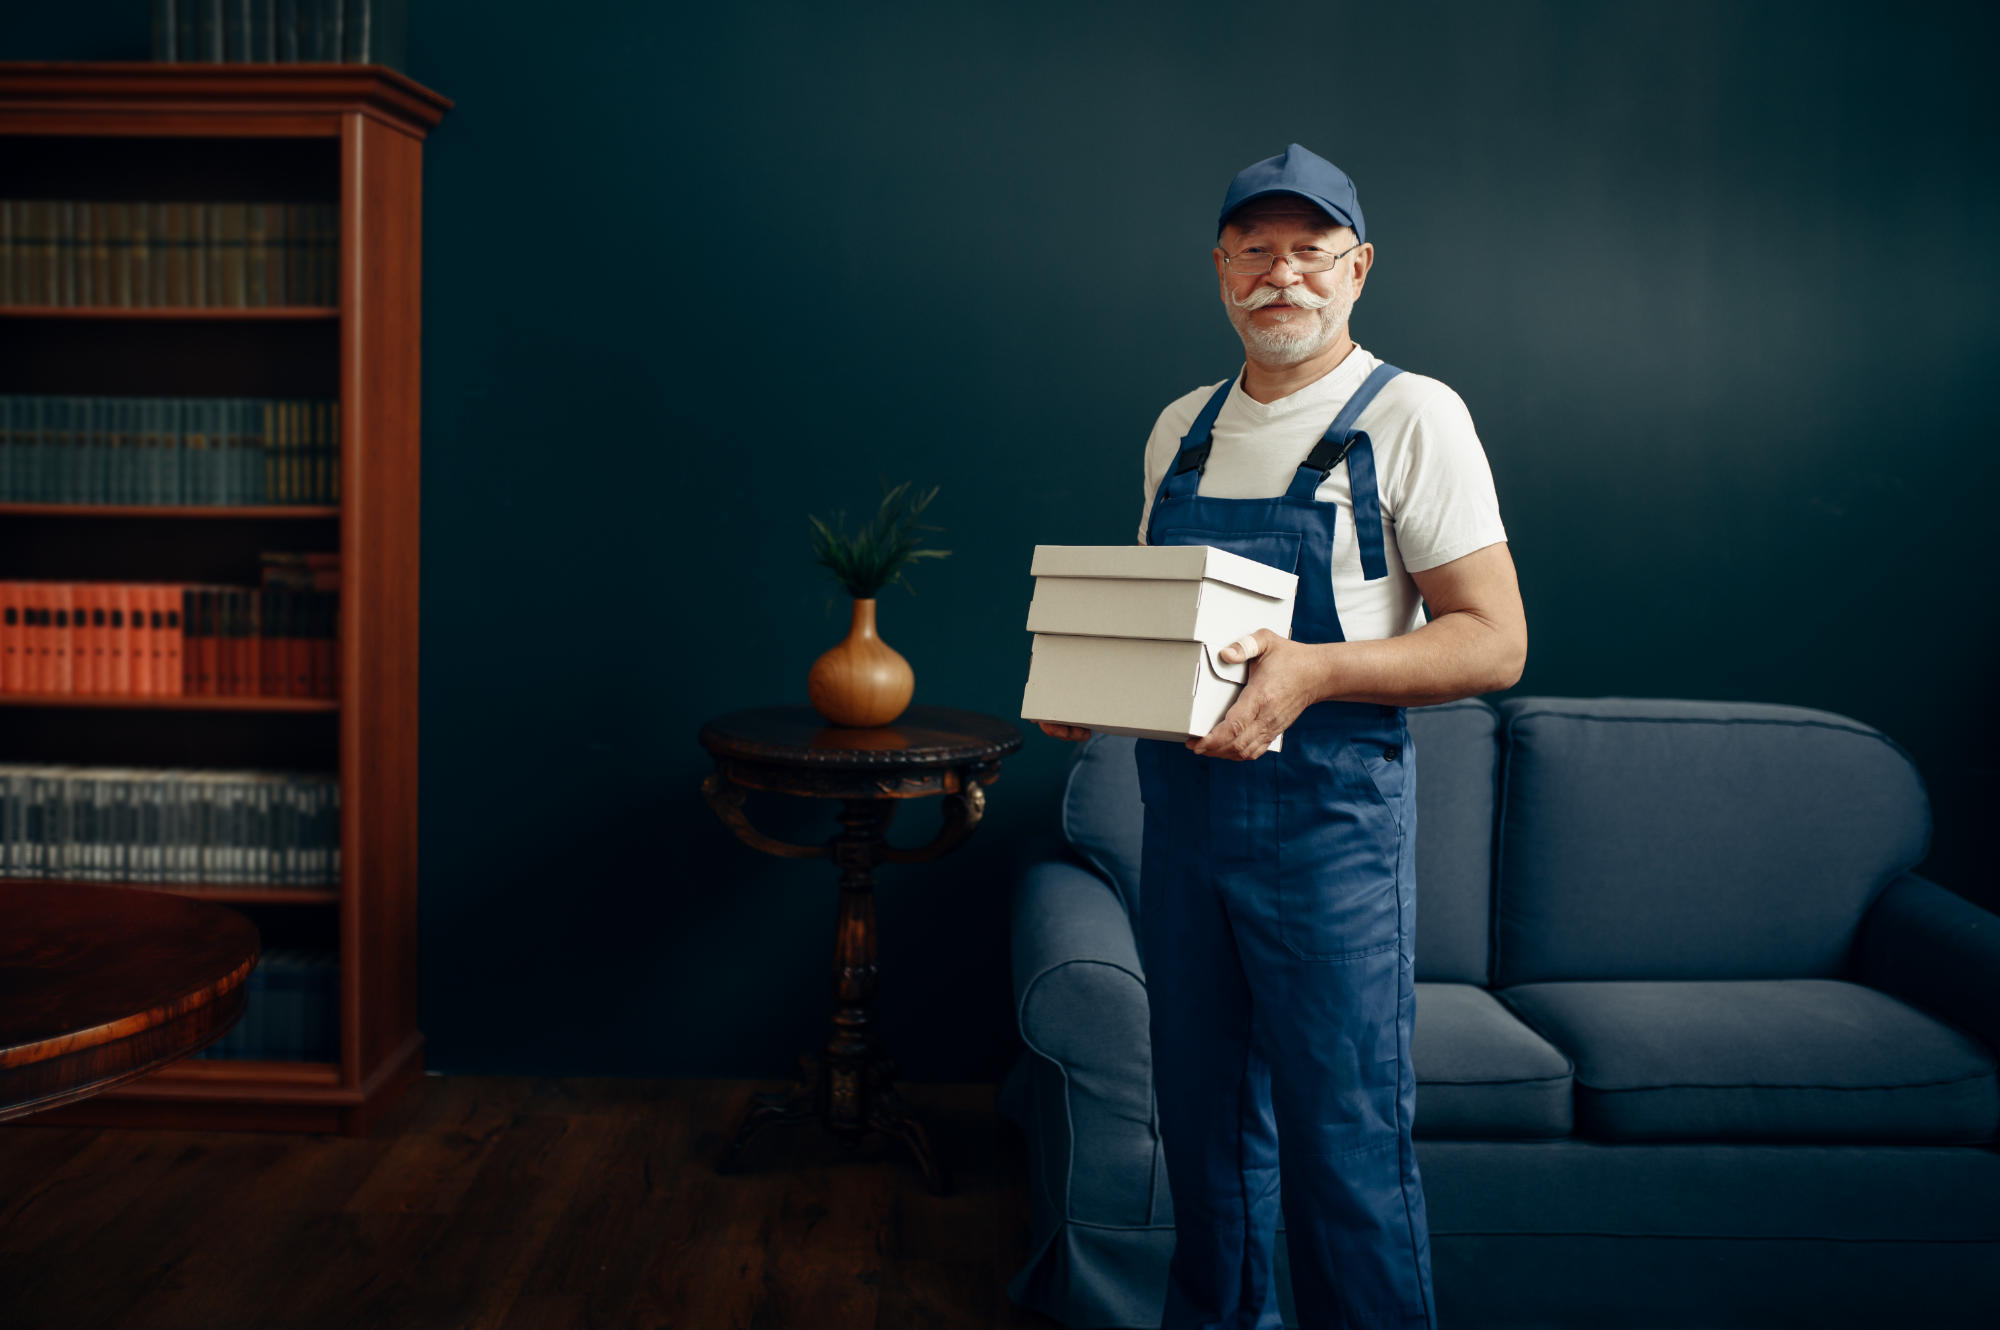 elderly-cargo-man-in-uniform-poses-in-home-office-6XAG2PS.jpg